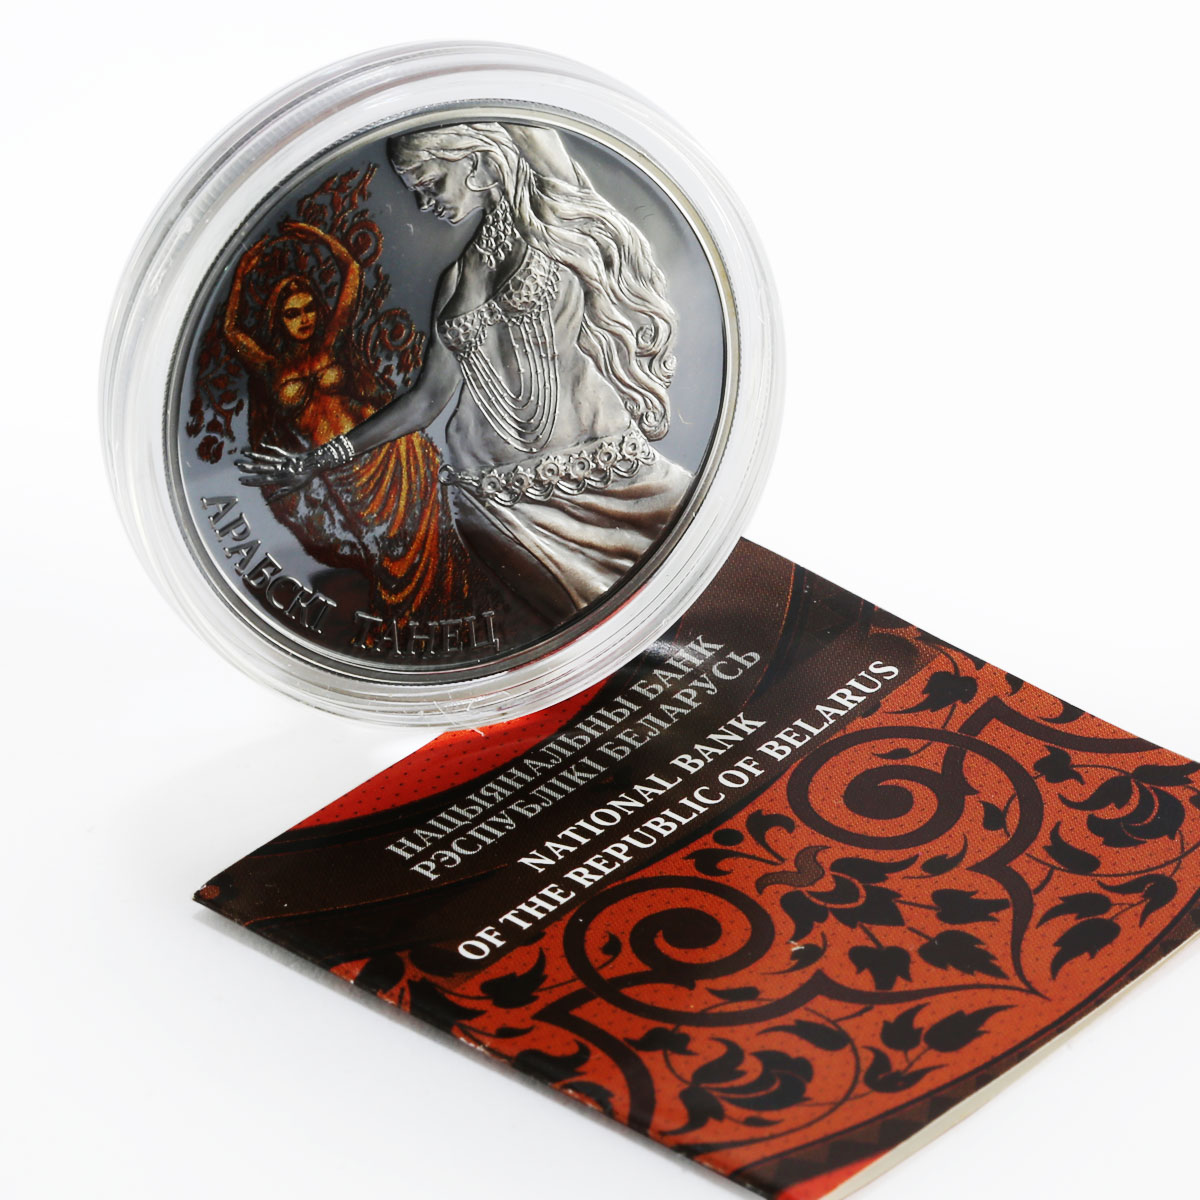 Belarus 20 rubles Magic of Dance The Arabic Dance Dancing Woman silver coin 2011